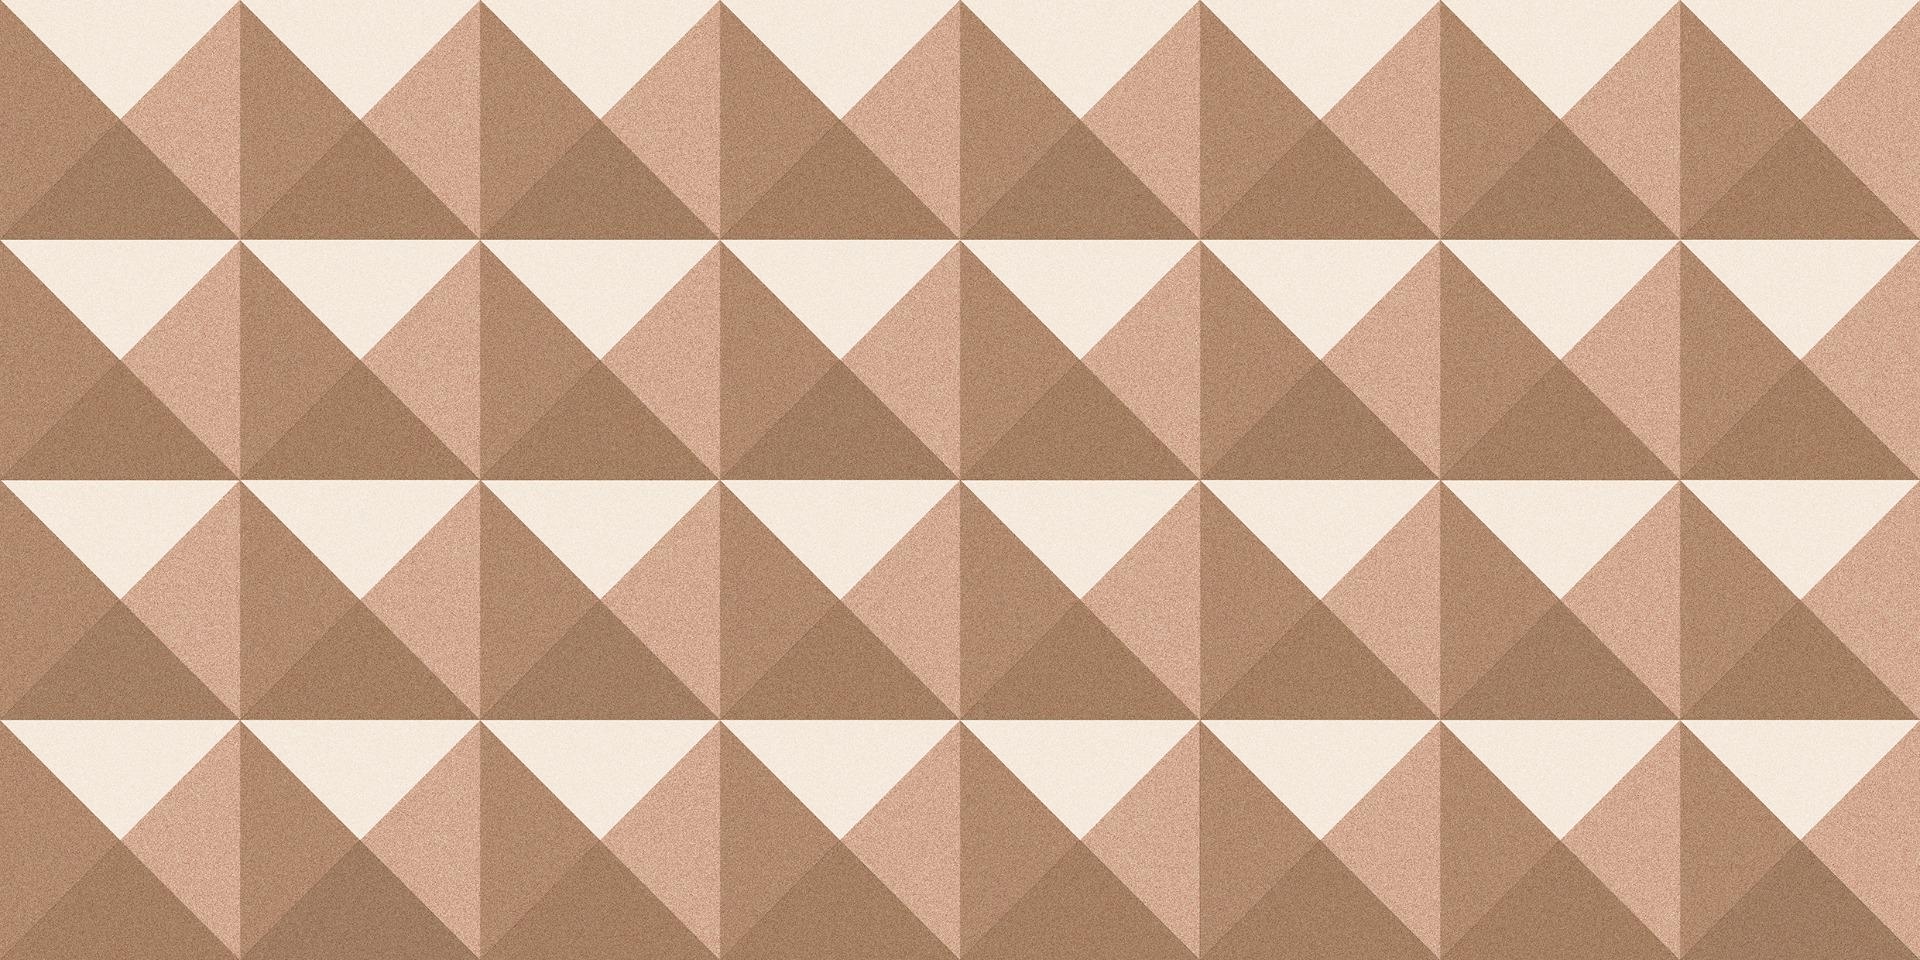 Stylized Tiles for Bathroom Tiles, Kitchen Tiles, Balcony Tiles